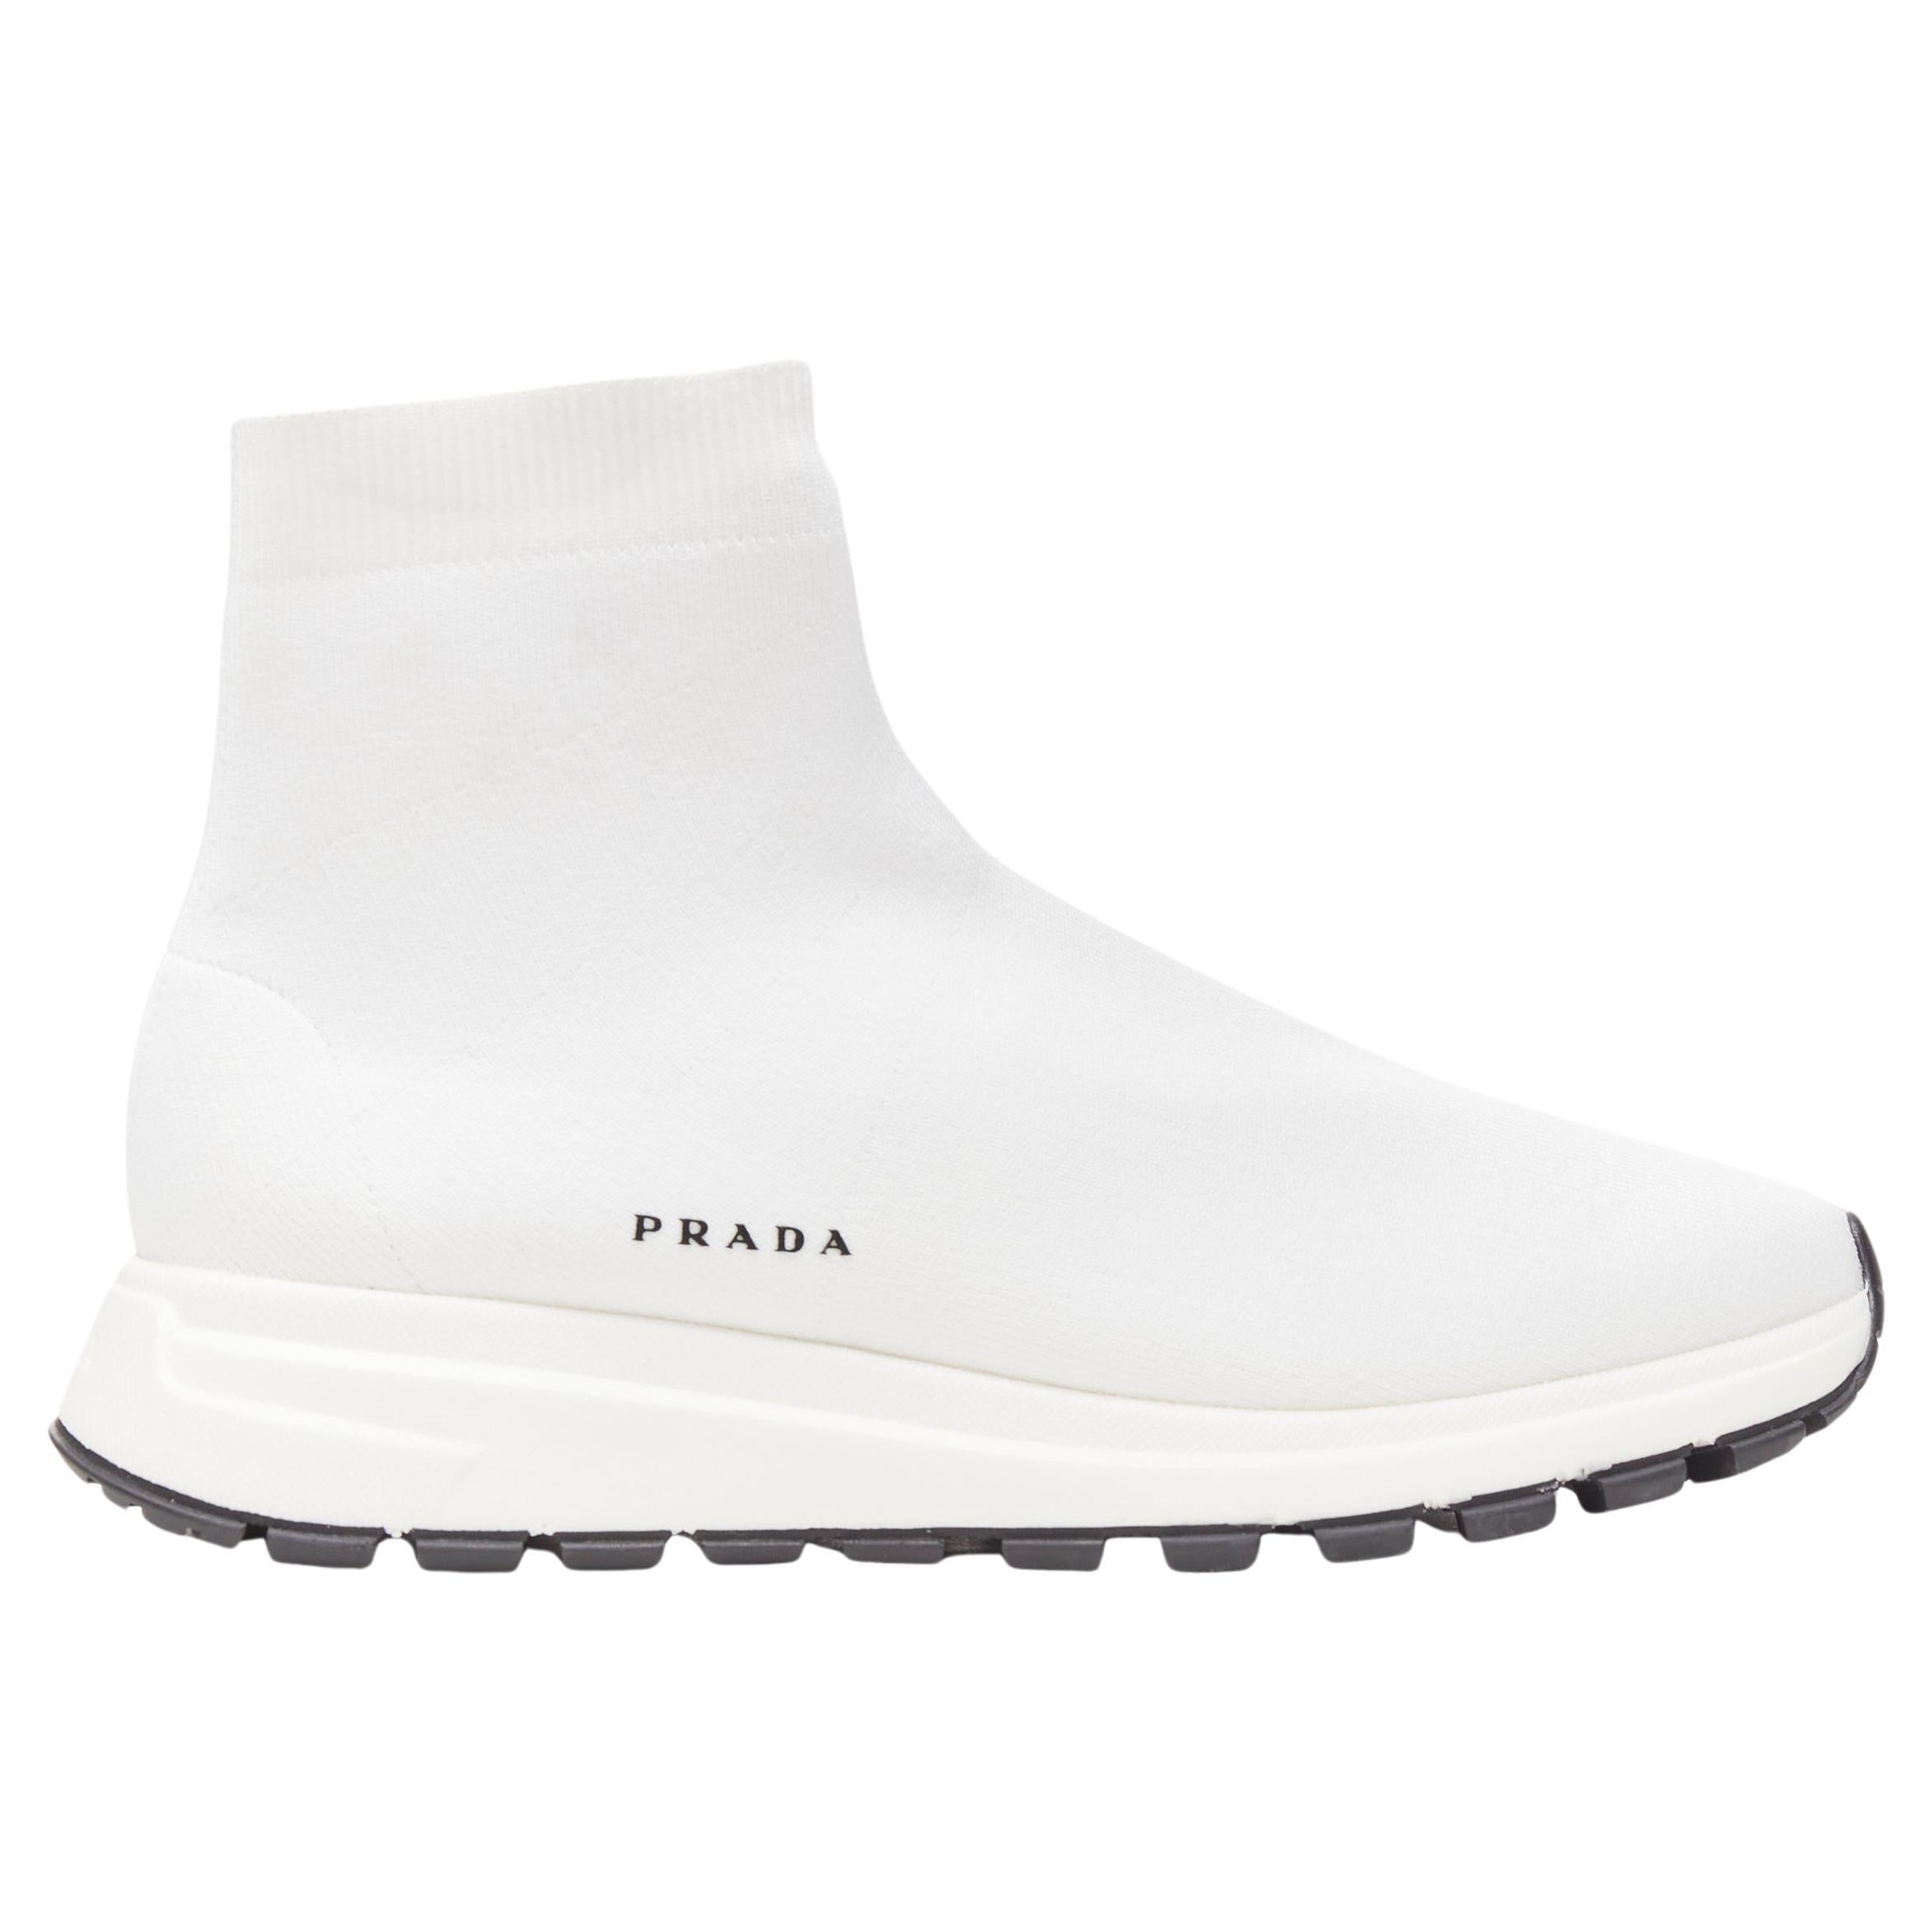 new PRADA white sock knit logo print high top sneaker UK5 US6 EU39